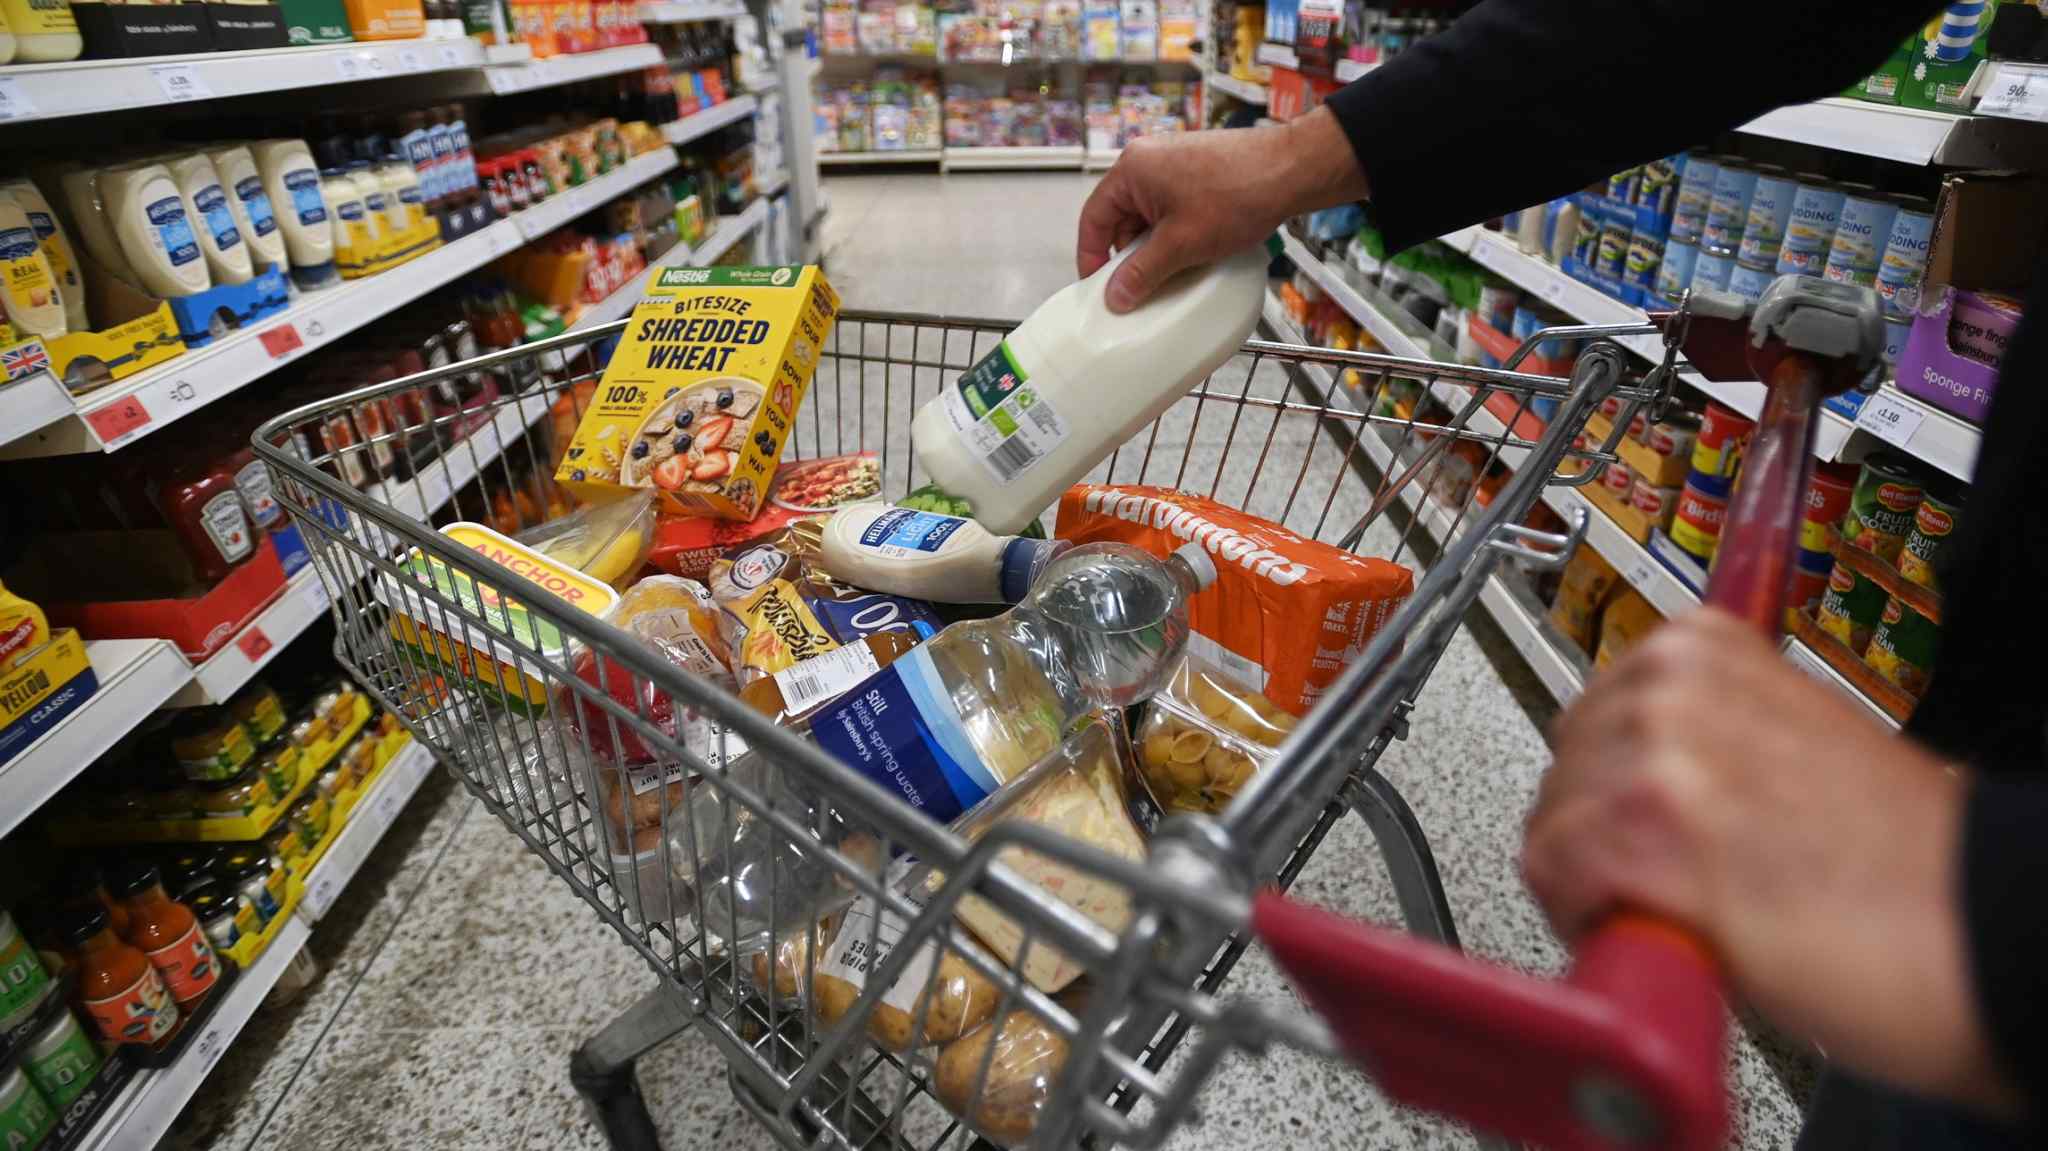 MPs and retailers lambast UK plan to cap basic food prices